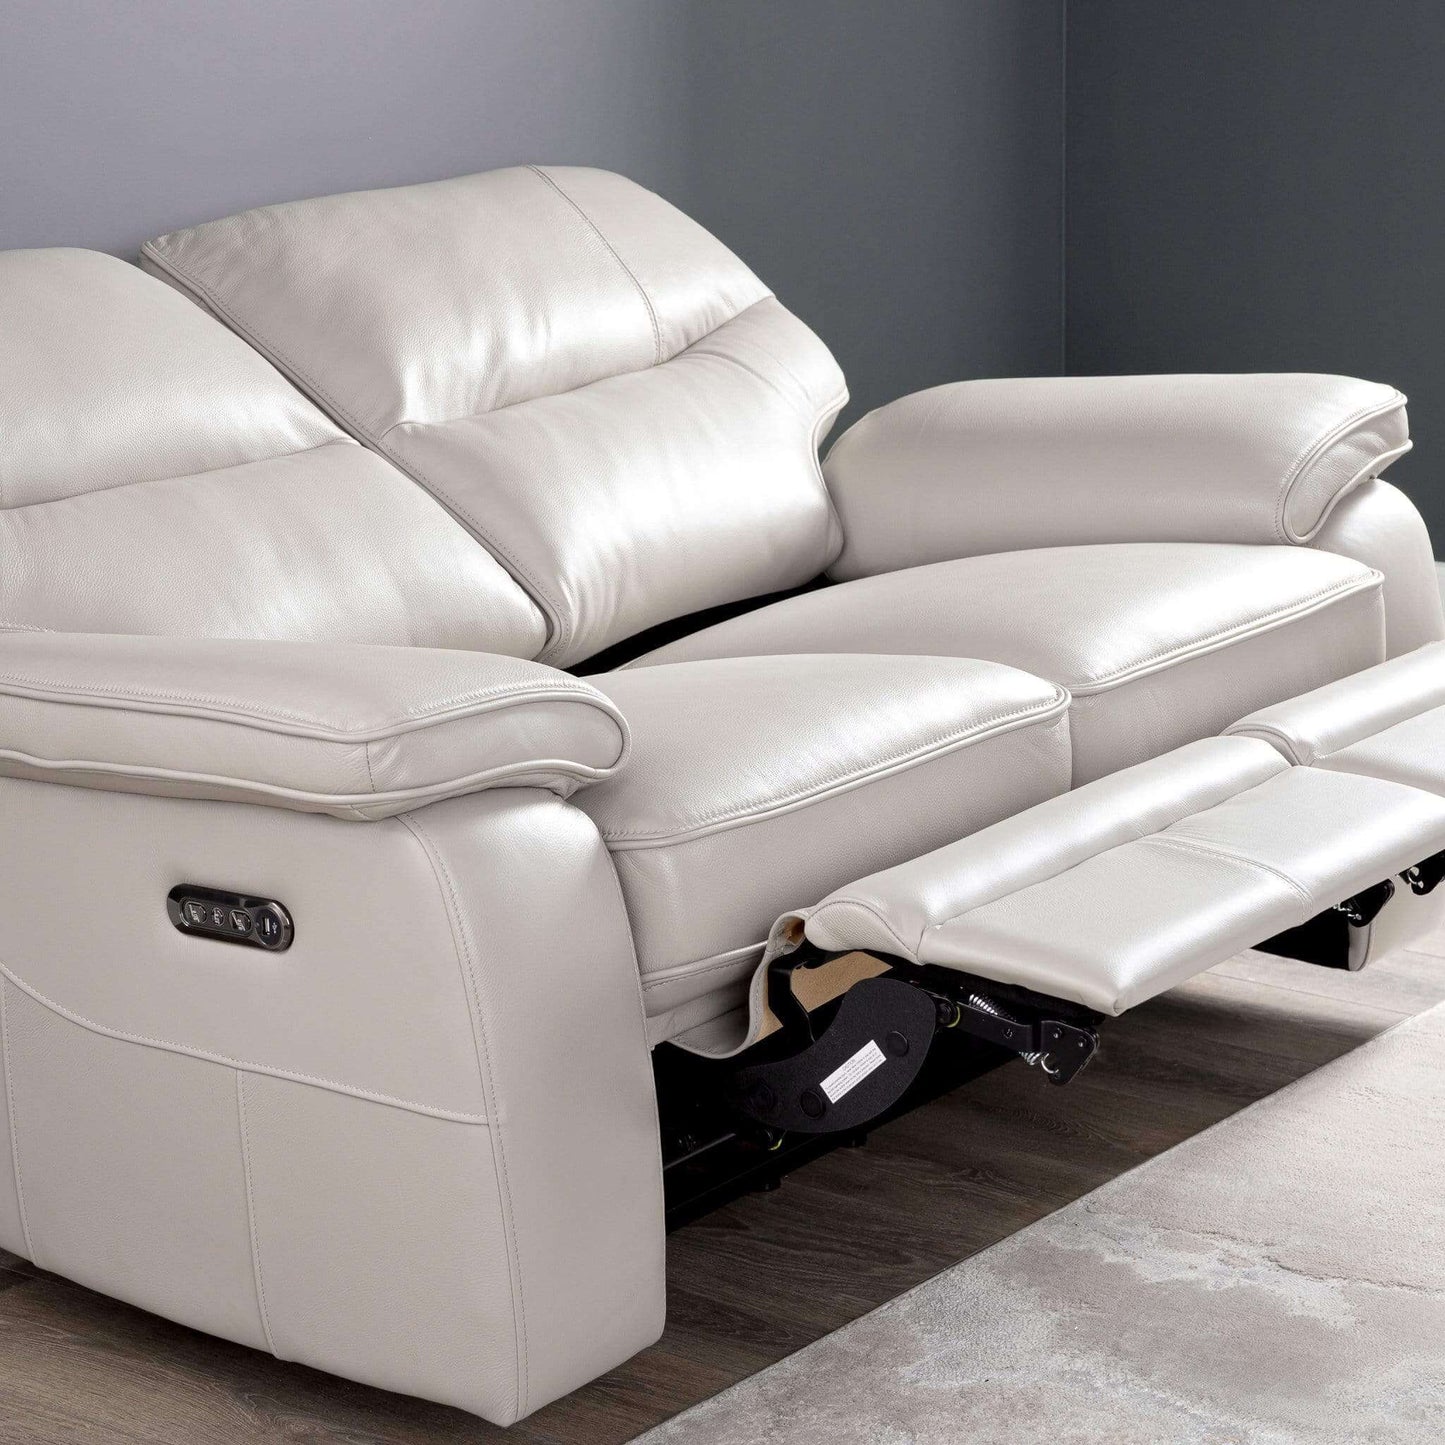 Furniture  -  Comfort King Napa 2 Seat Electric Reclining Sofa - Lead Grey  -  50153199